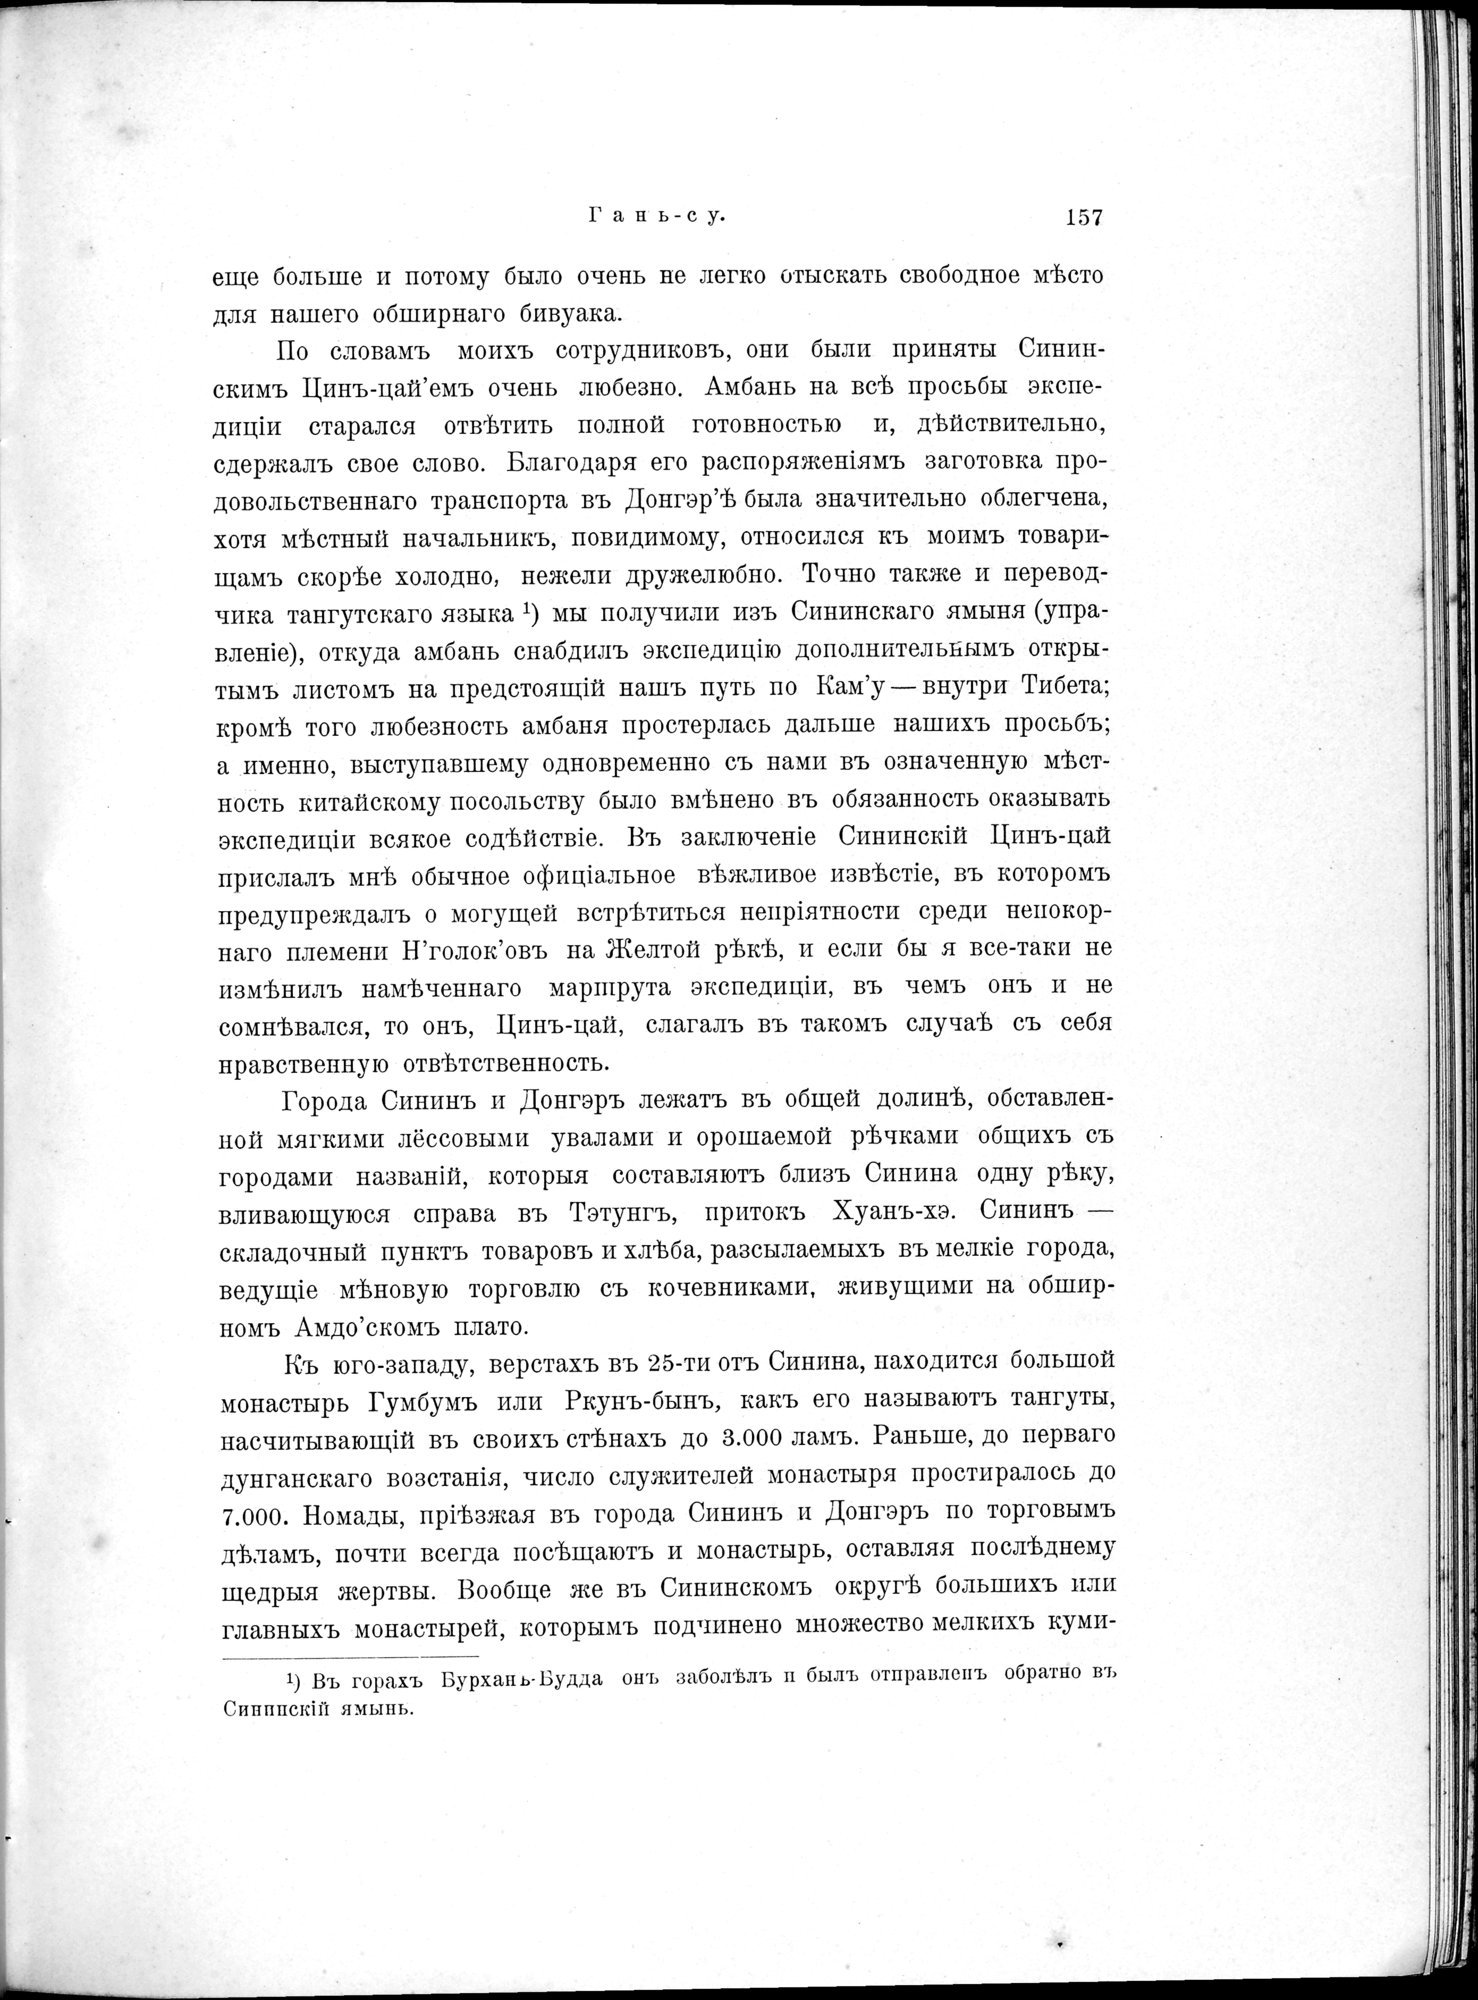 Mongoliia i Kam : vol.1 / Page 203 (Grayscale High Resolution Image)